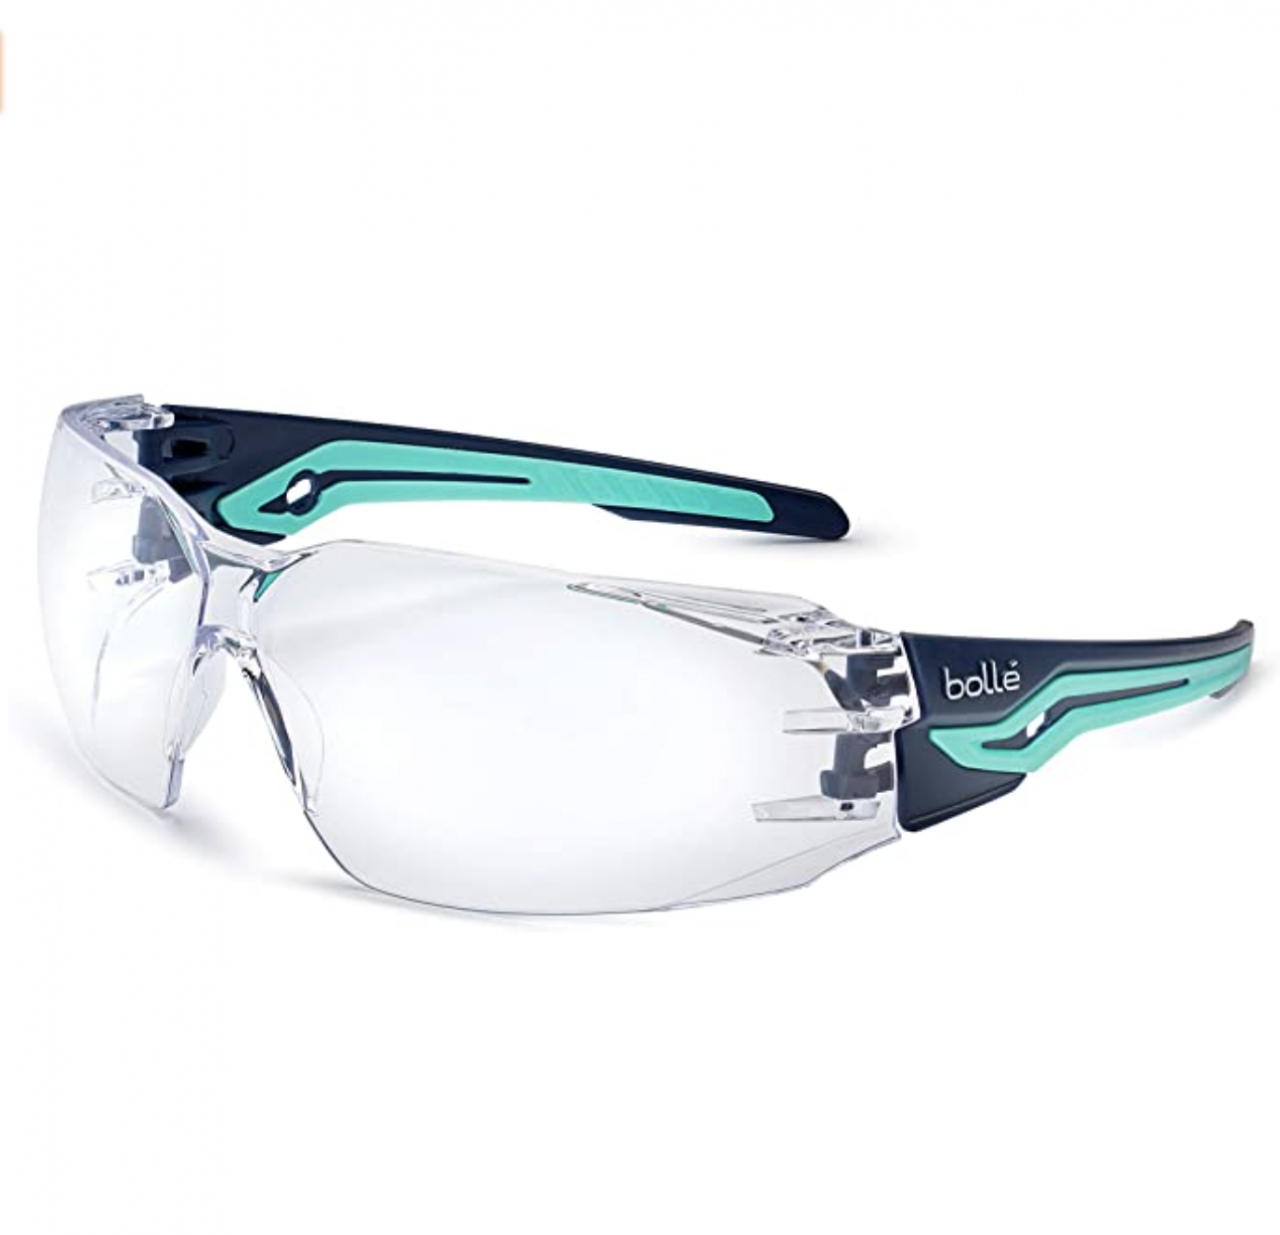 NoCry Anti-Fog Scratch Resistant Adjustable Safety Glasses